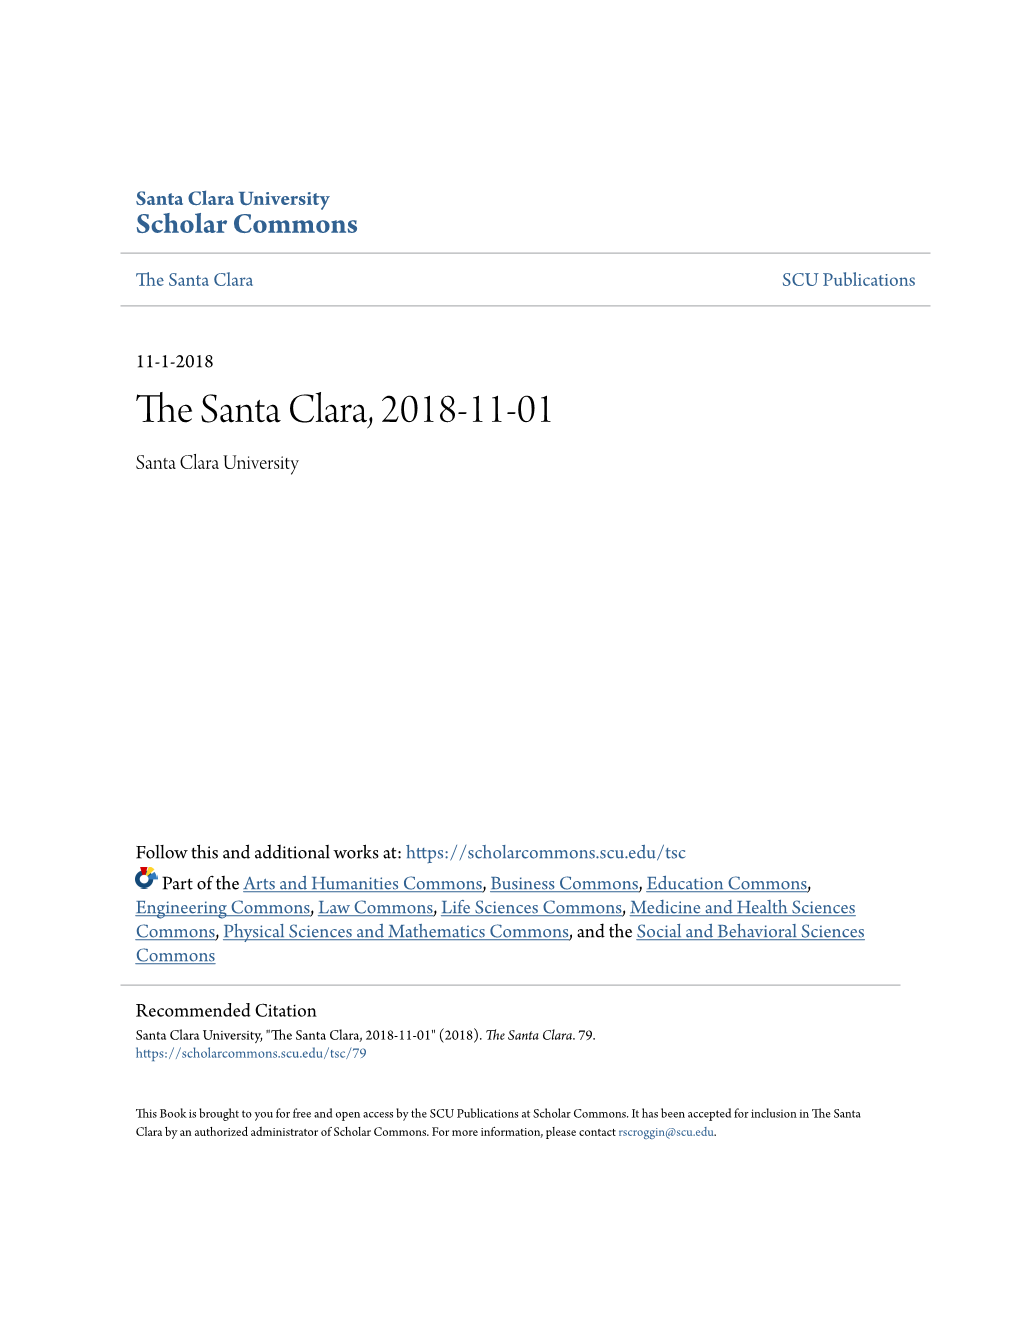 The Santa Clara, 2018-11-01